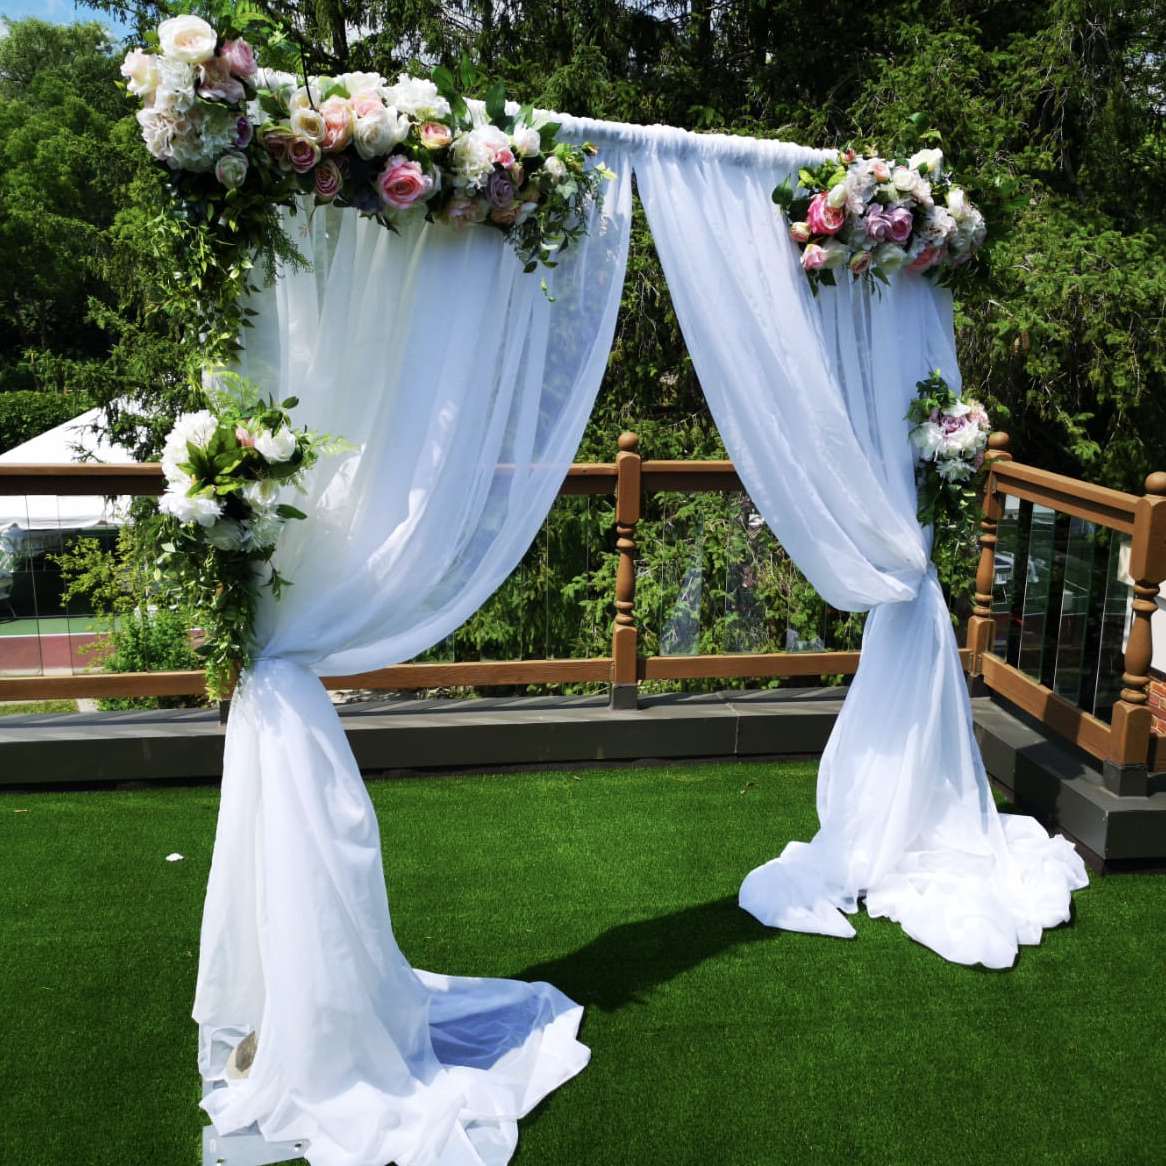 kitchener wedding flower arch rental company